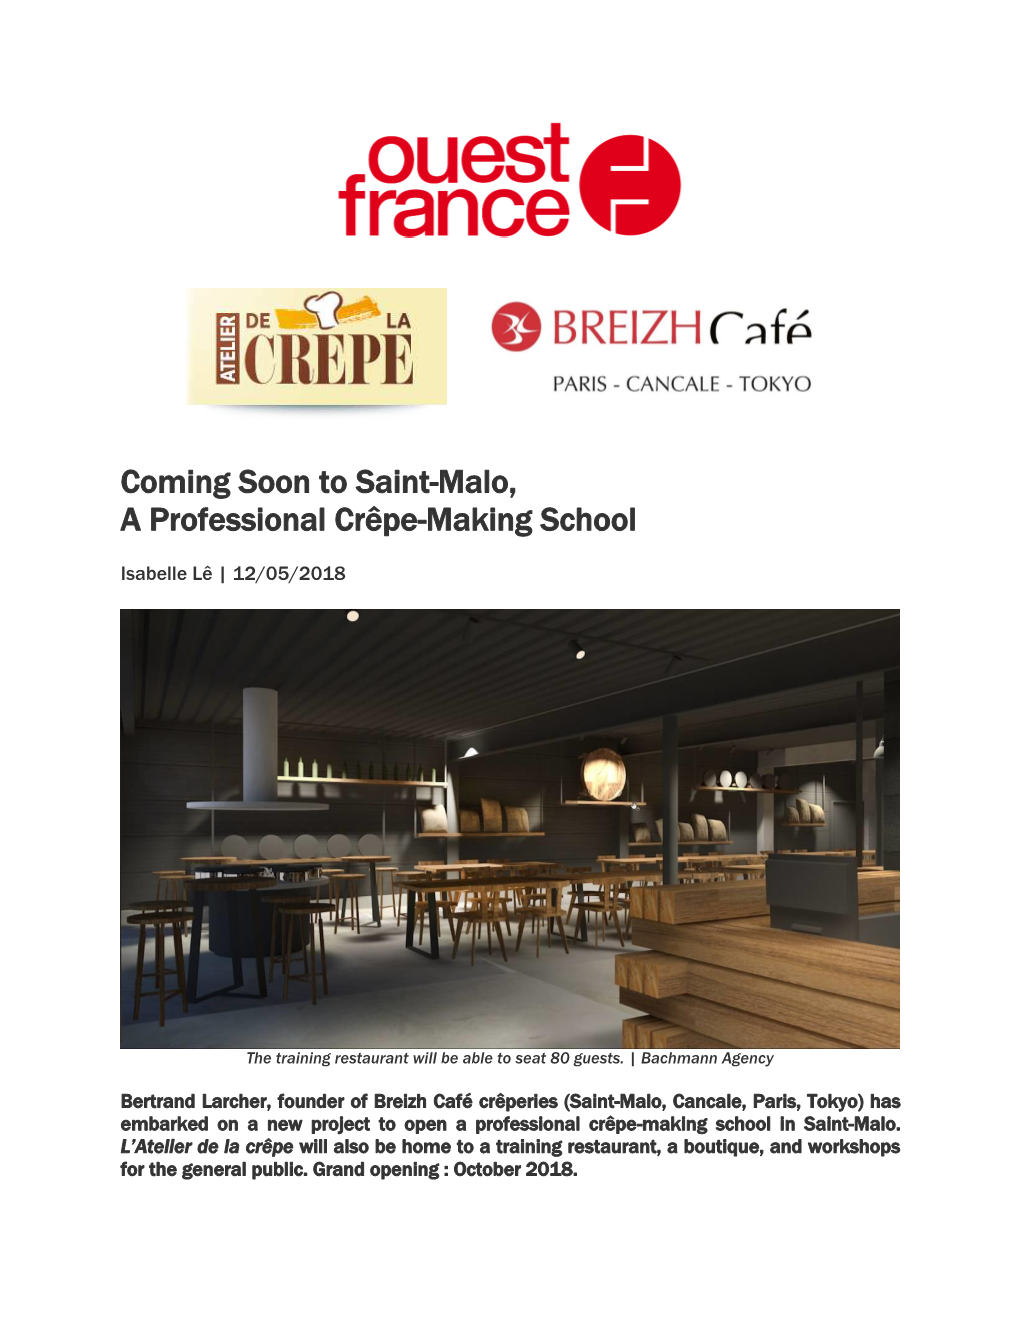 Coming Soon to Saint-Malo, a Professional Crêpe-Making School